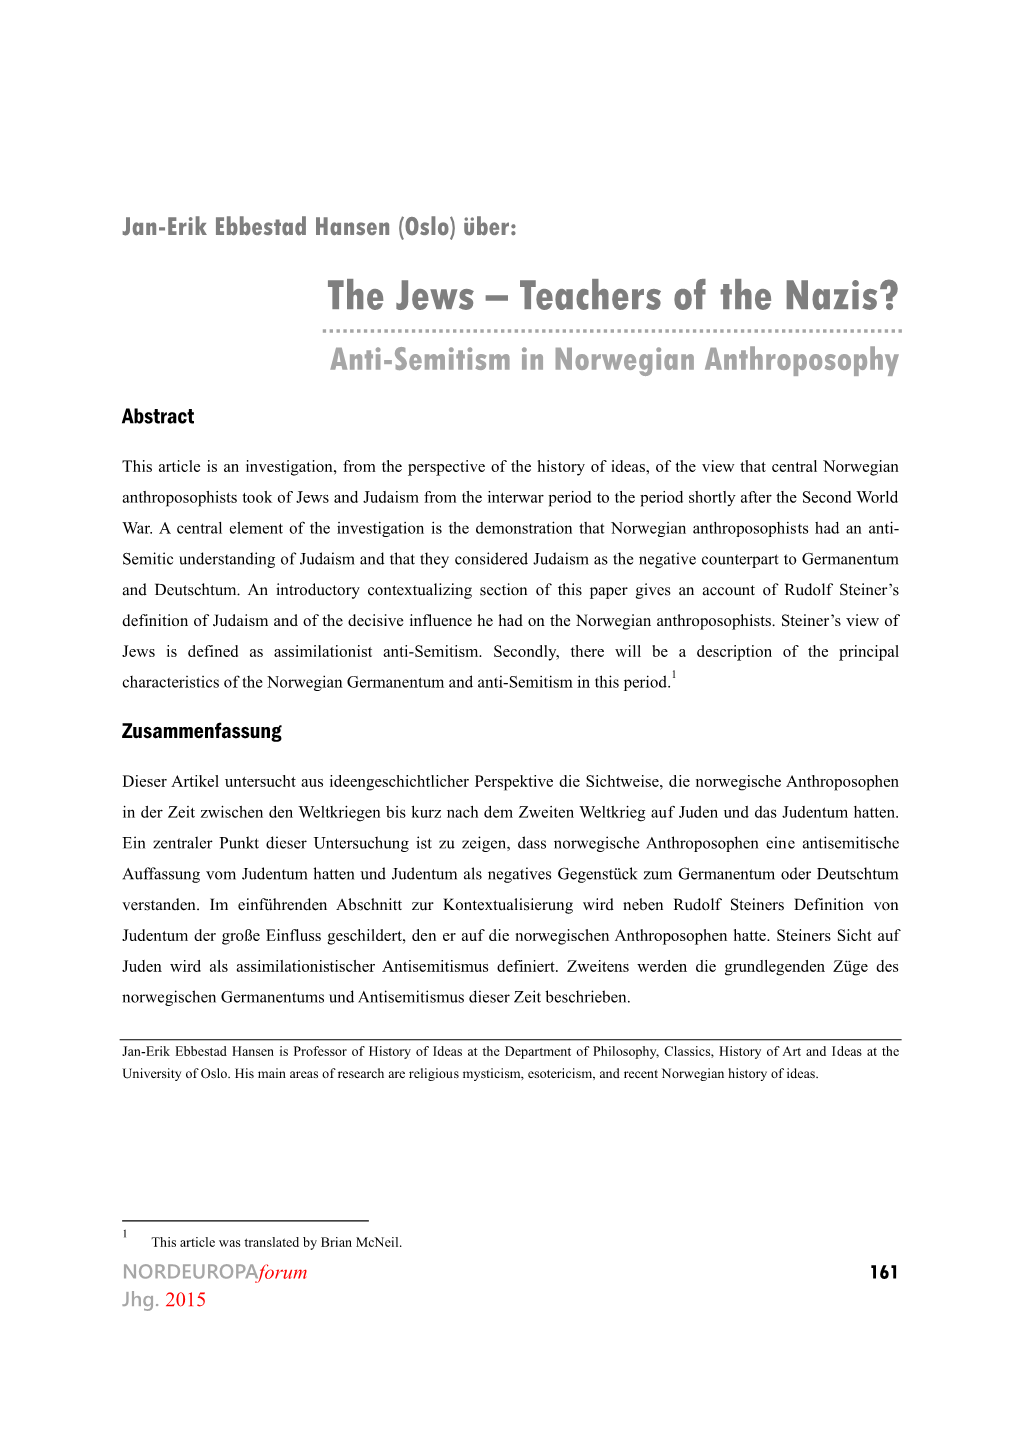 The Jews – Teachers of the Nazis?